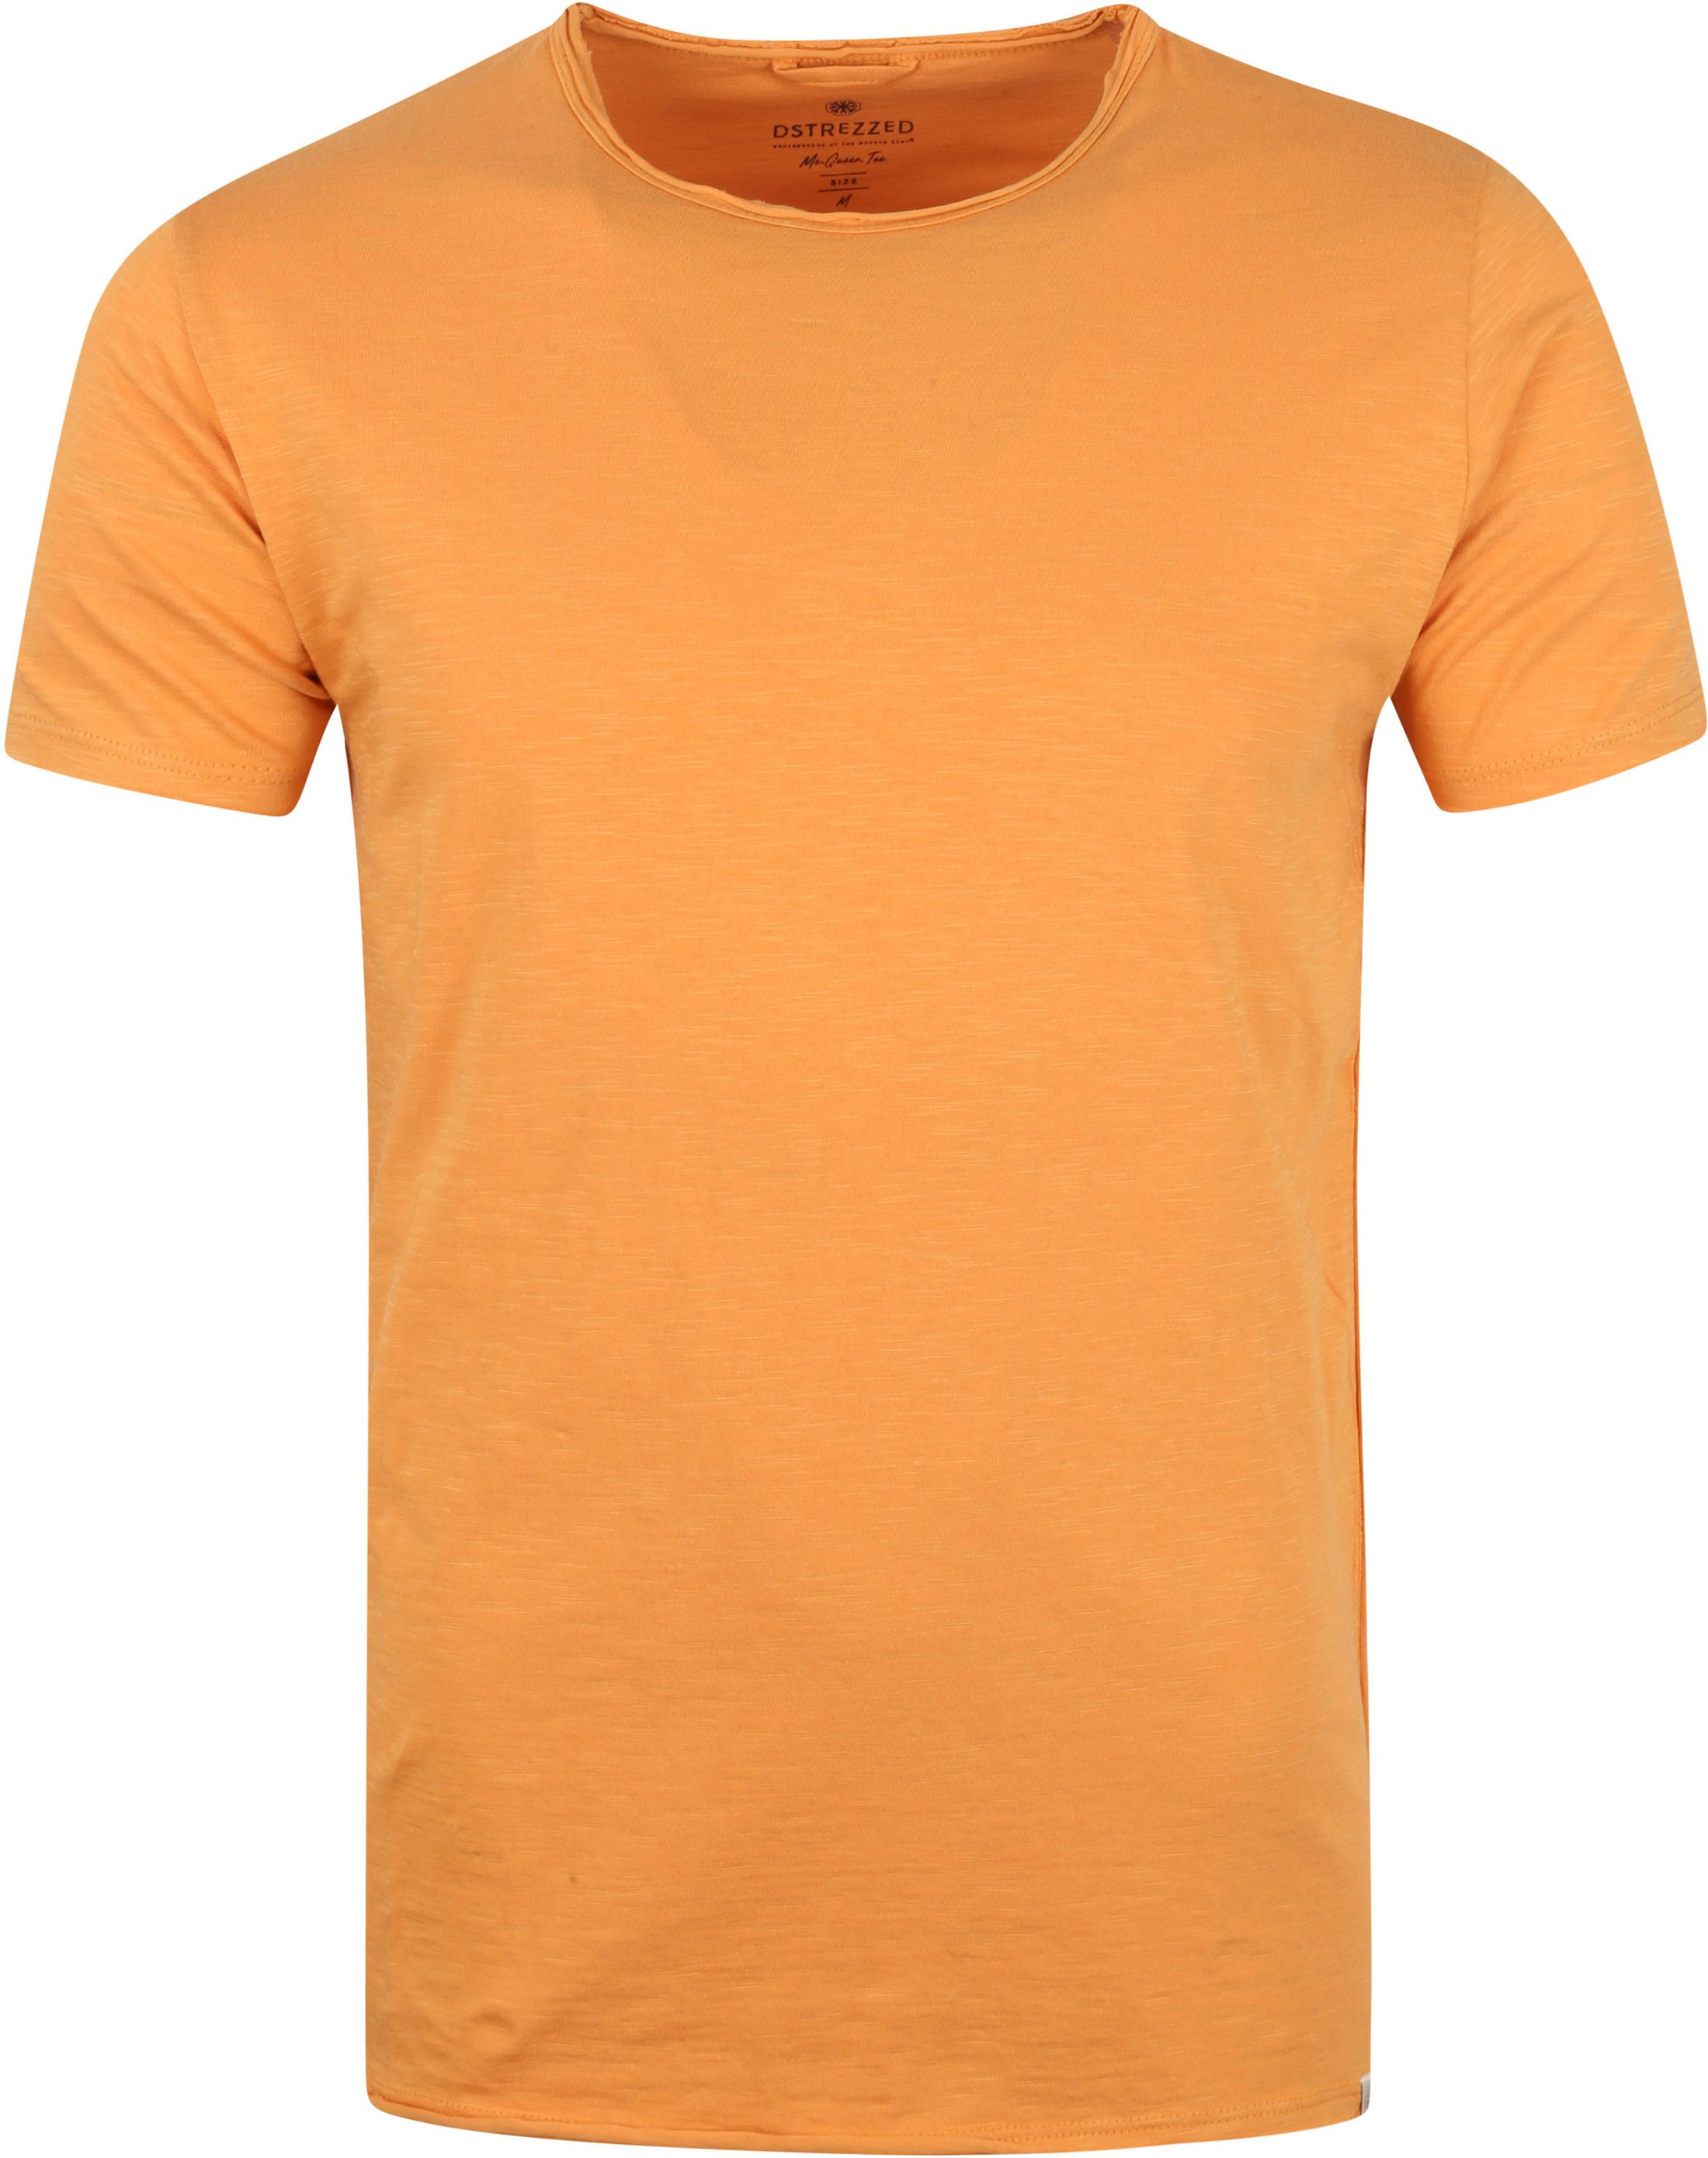 Dstrezzed Mc Queen T Shirt Orange size L